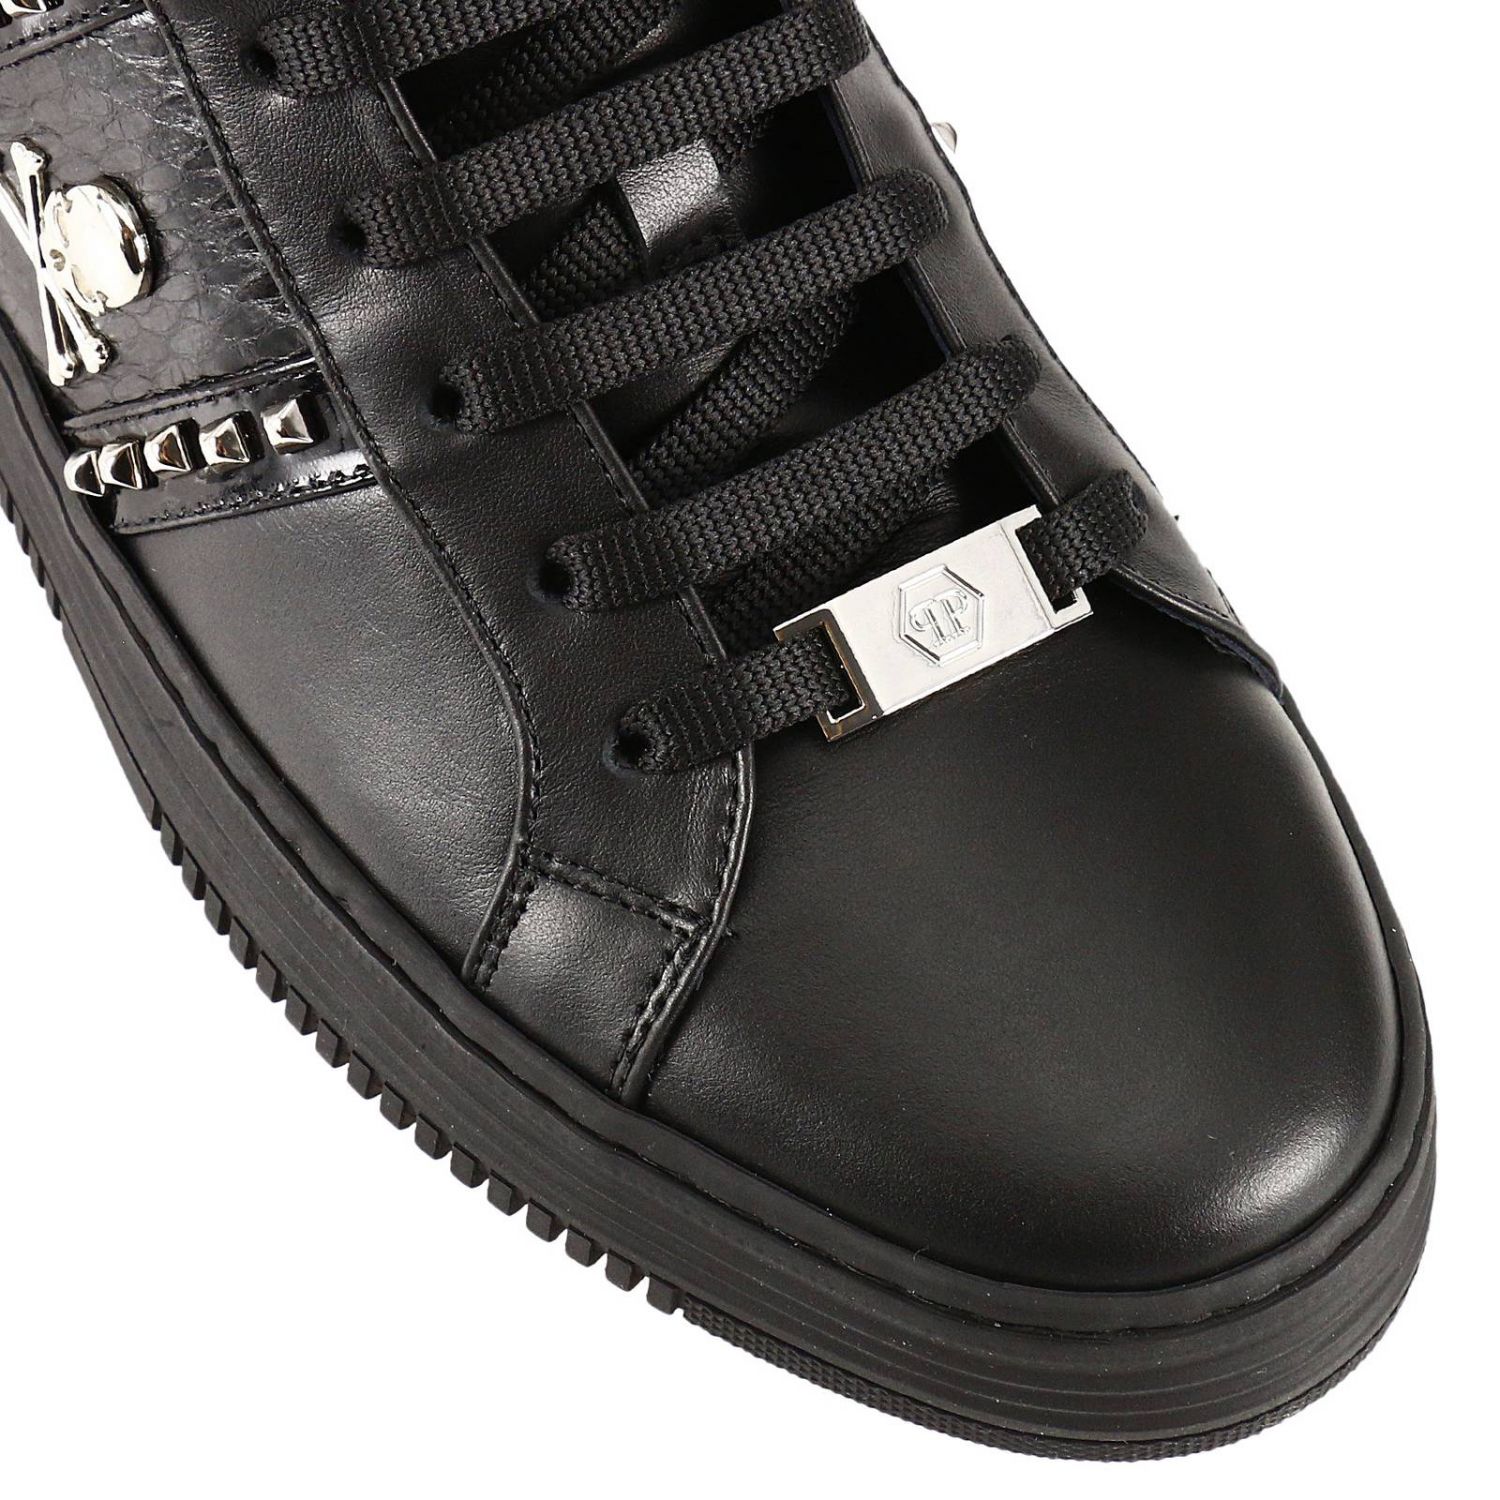 Philipp Plein Outlet: Shoes men | Sneakers Philipp Plein Men Black ...